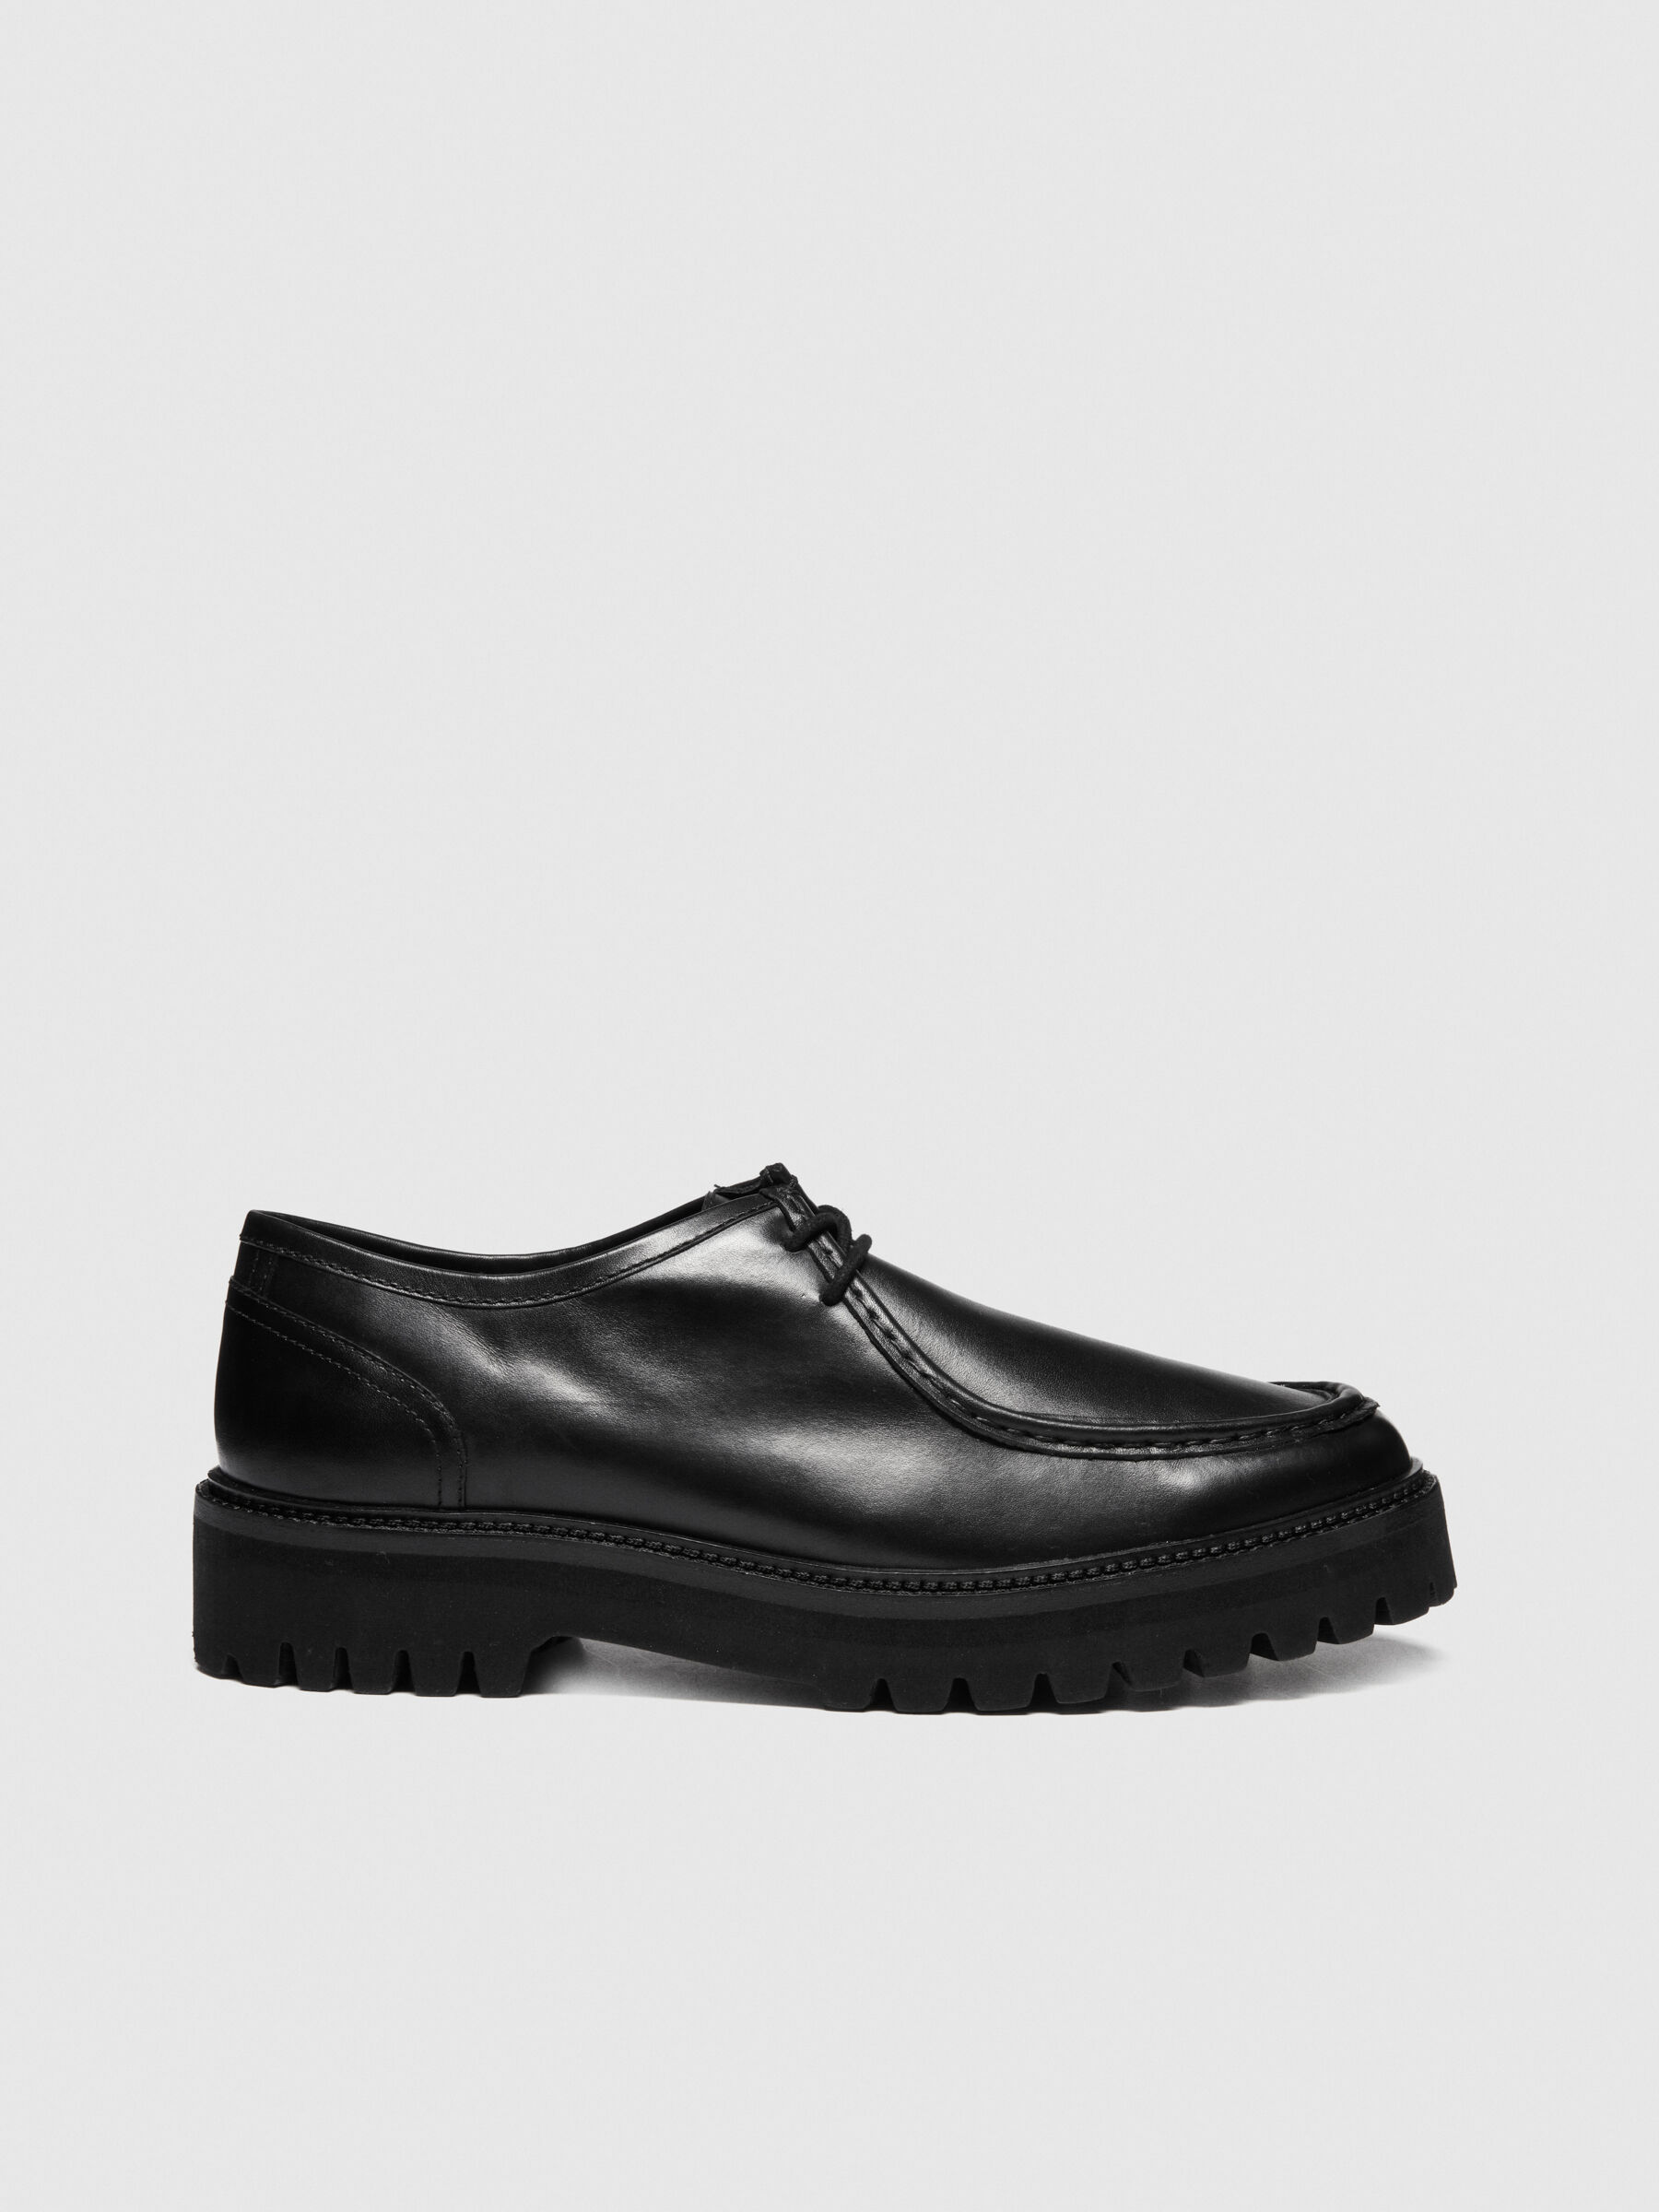 Leather shoes, Black - Sisley